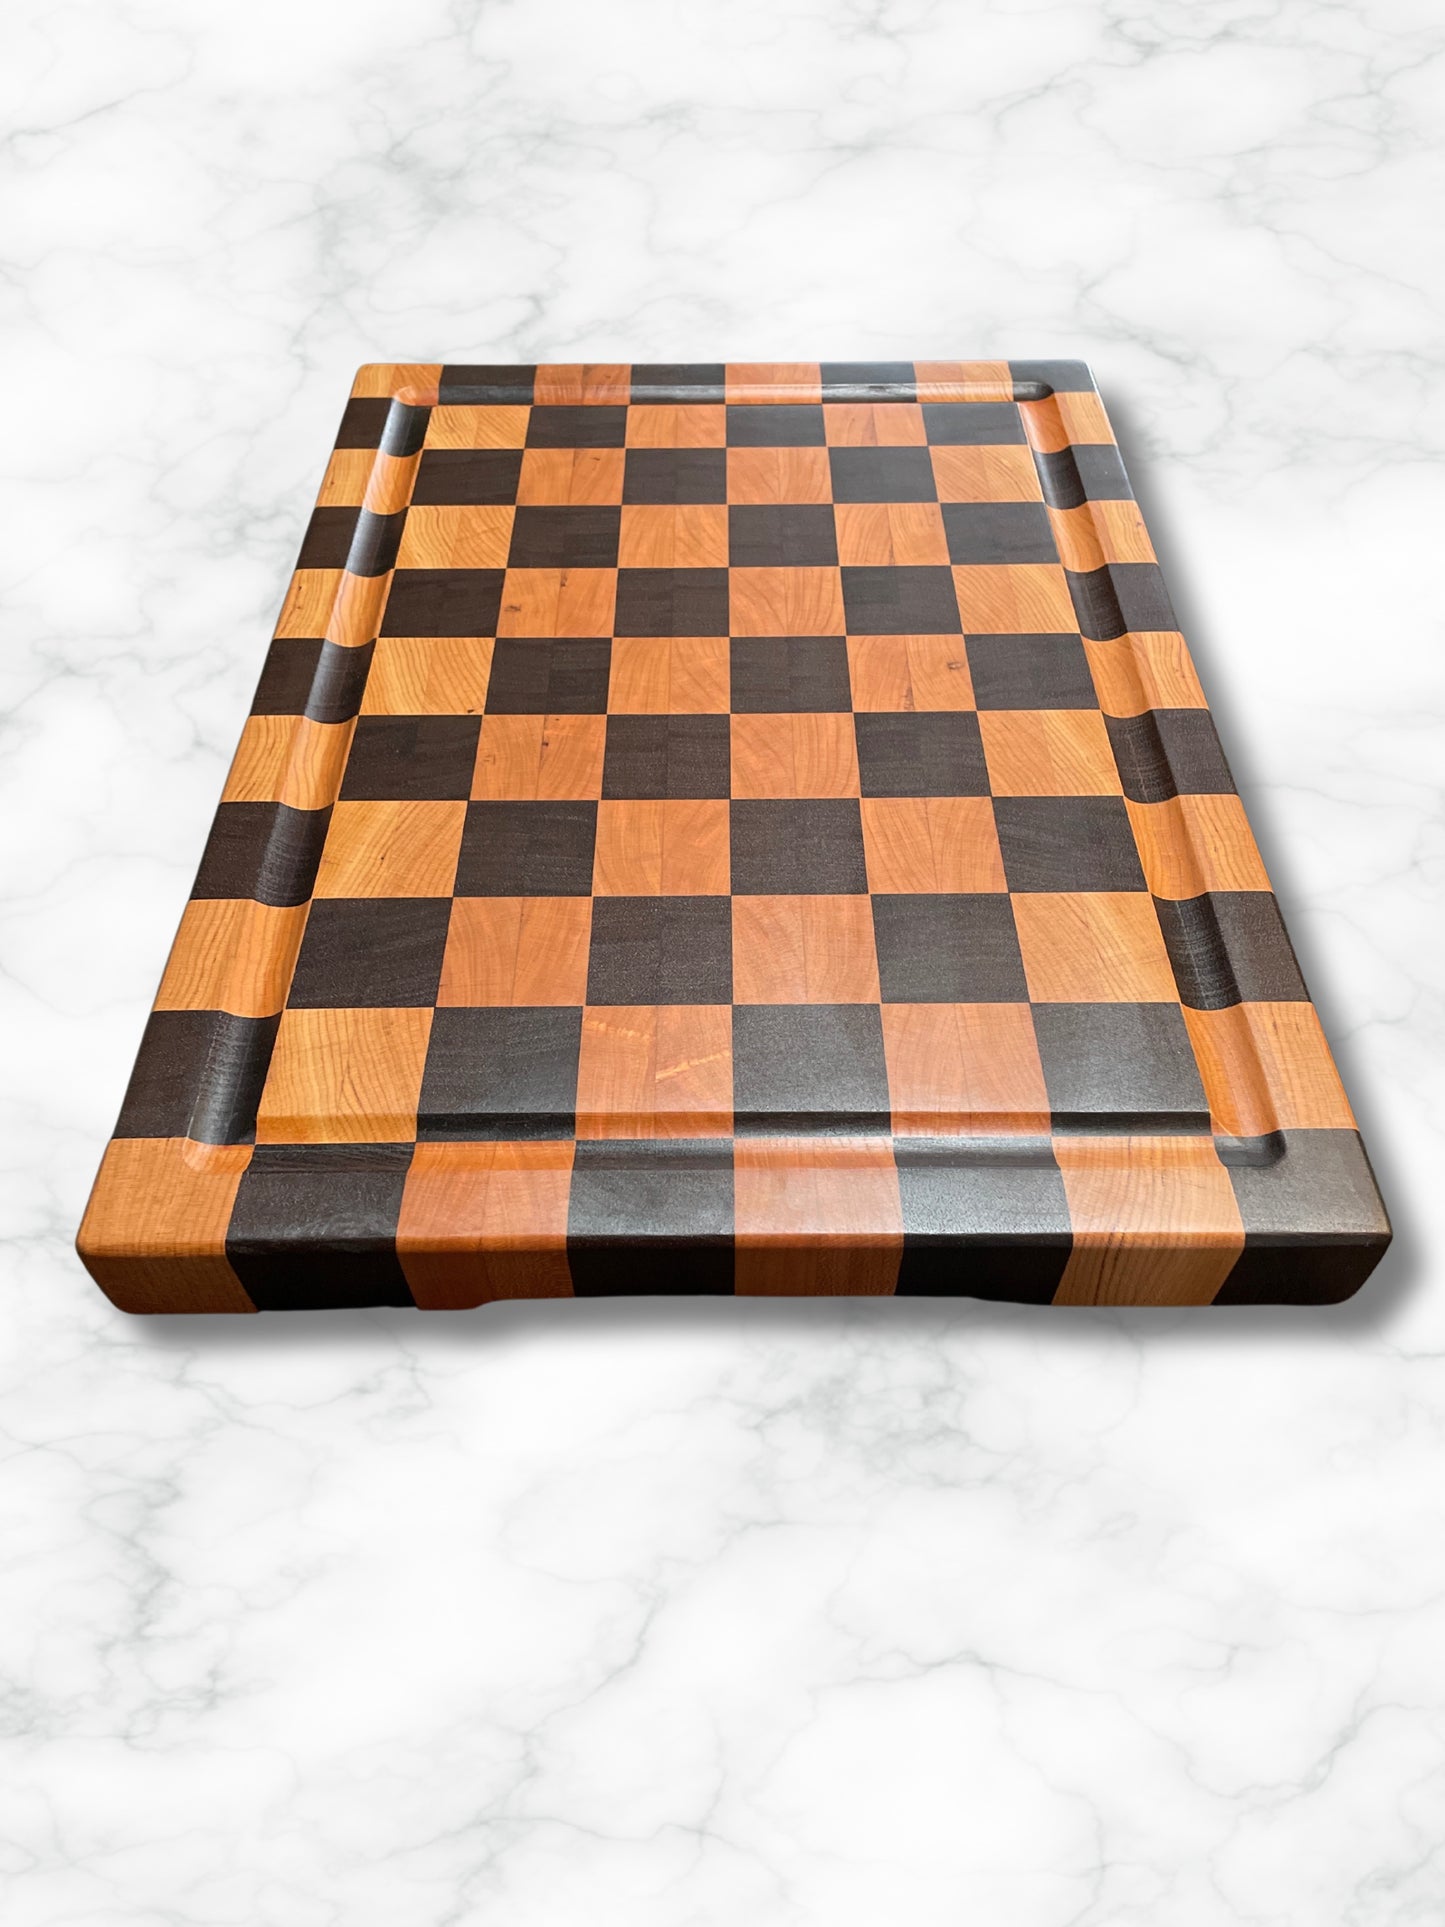 custom handmade end grain walnut cherry wood cutting board, top view